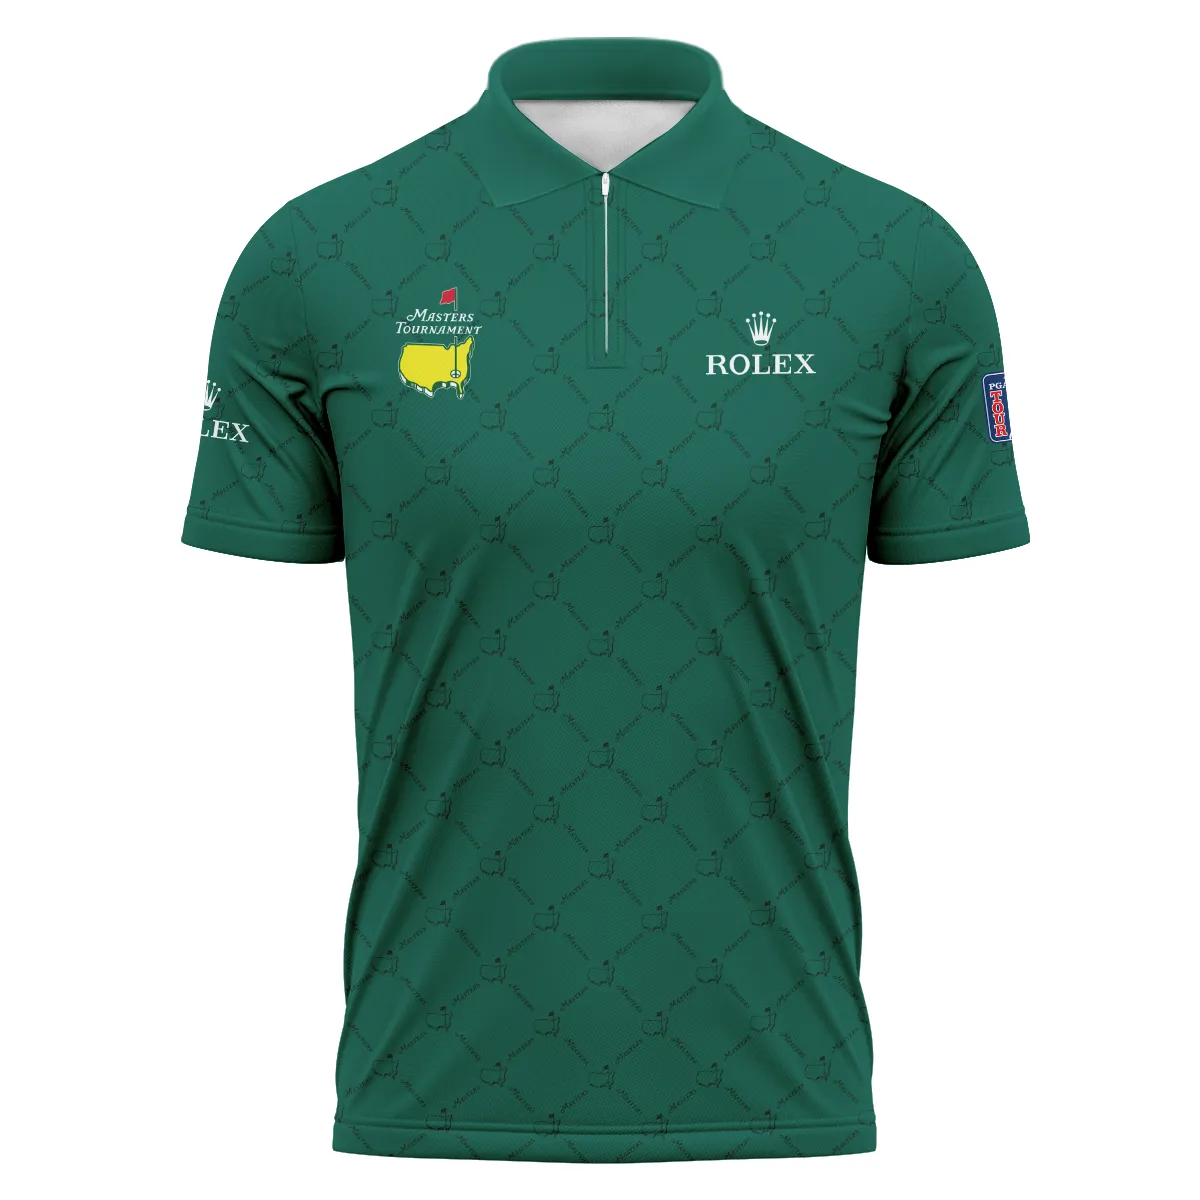 Golf Sport Pattern Color Green Mix Black Masters Tournament Rolex Zipper Hoodie Shirt Style Classic